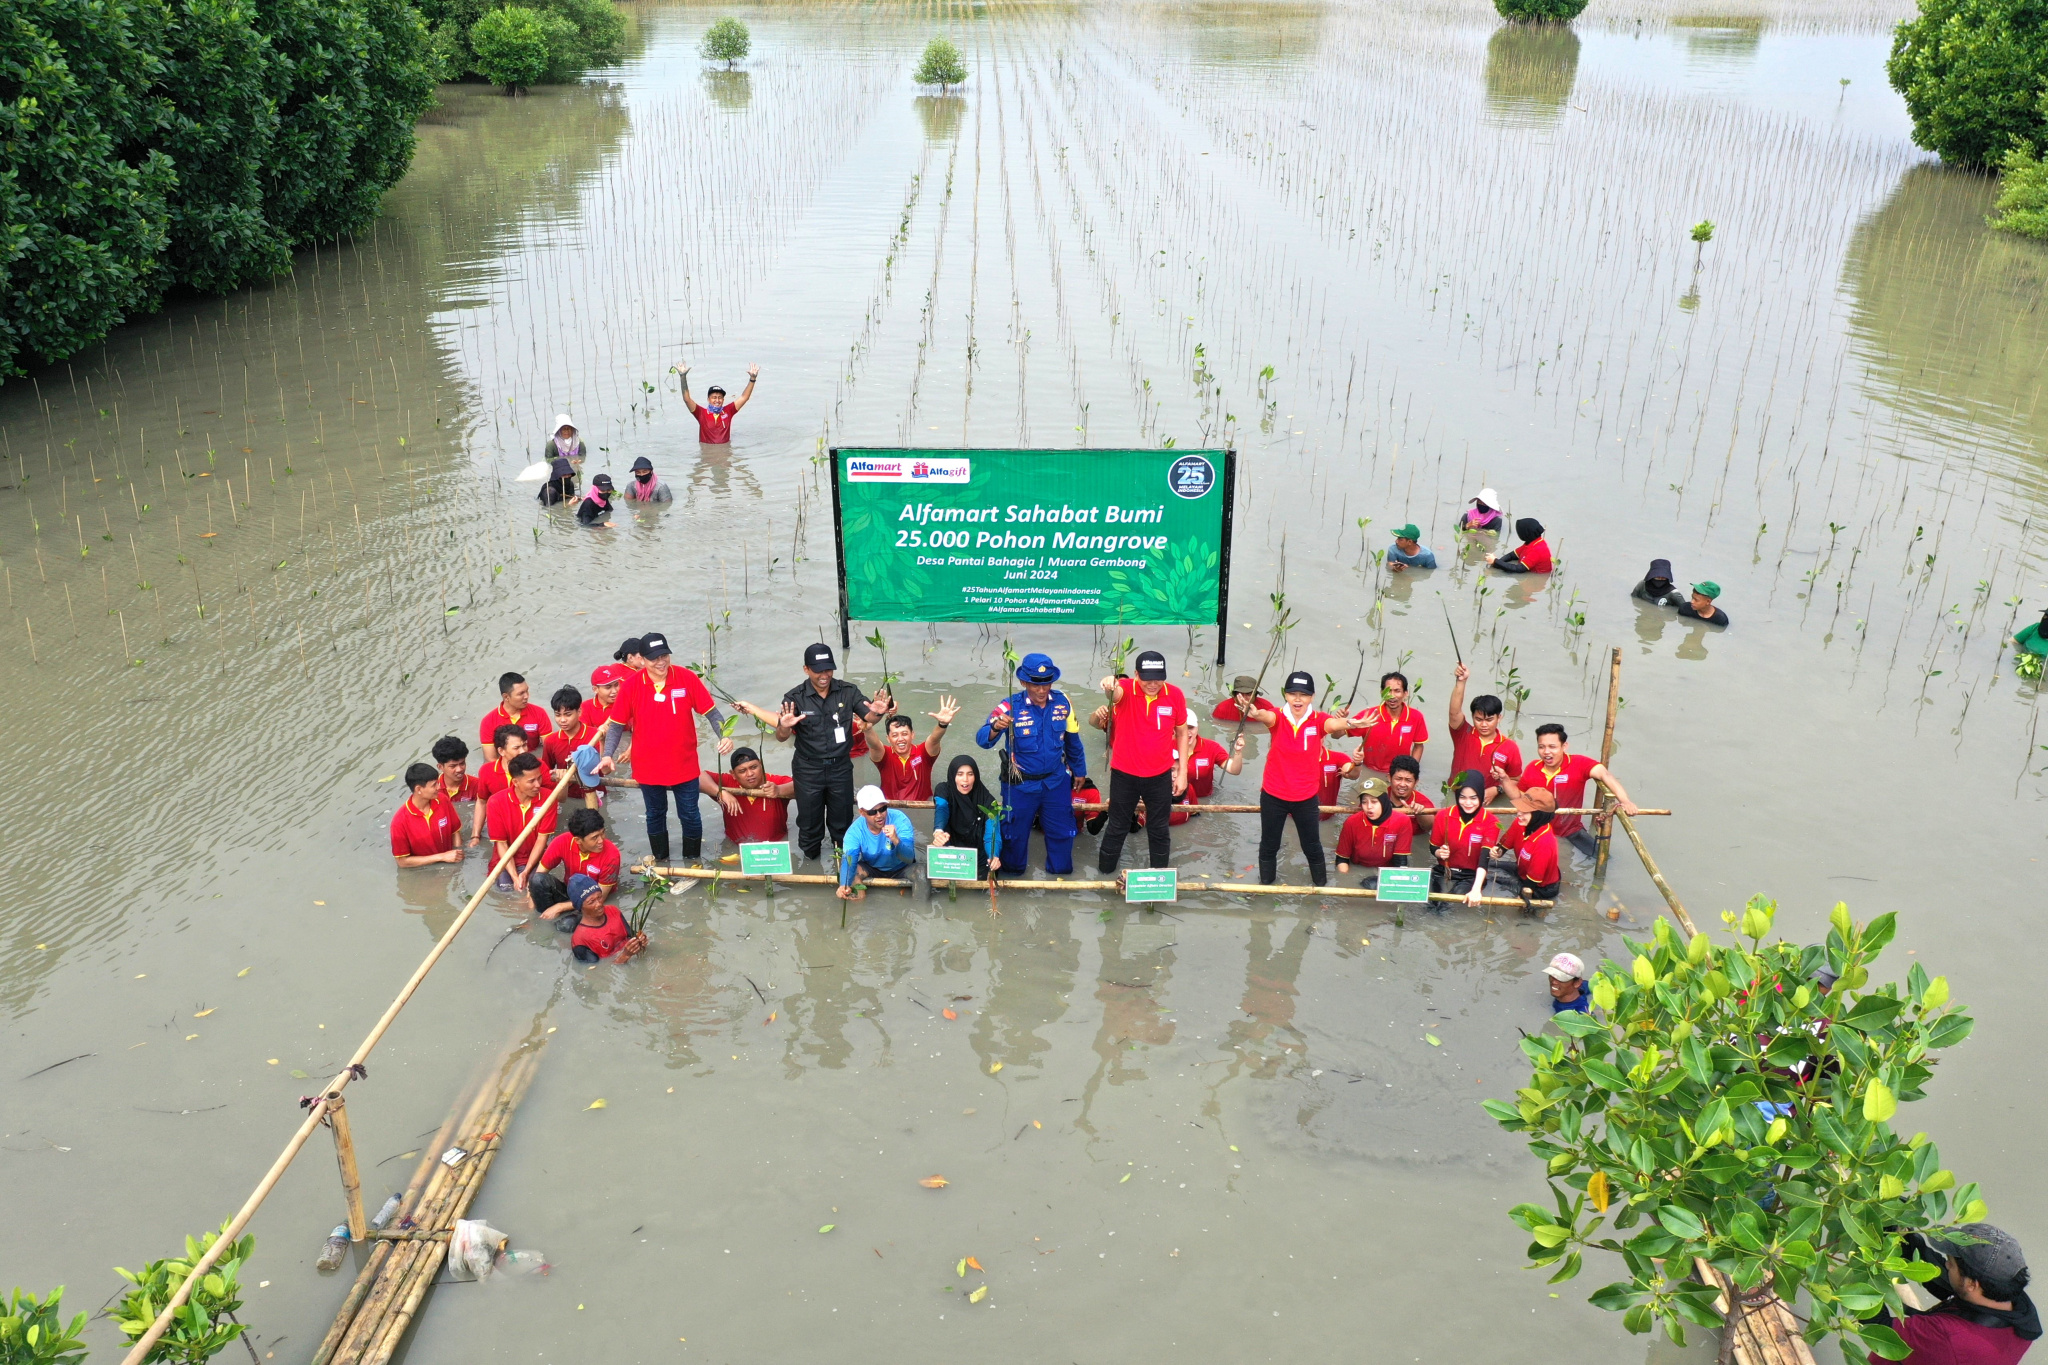 Peringati HUT ke-25, Alfamart Lestari Lingkungan Tanam 25.000 Bibit Mangrove di Muara Gembong, Upaya Cegah Abrasi Pesisir Pantai